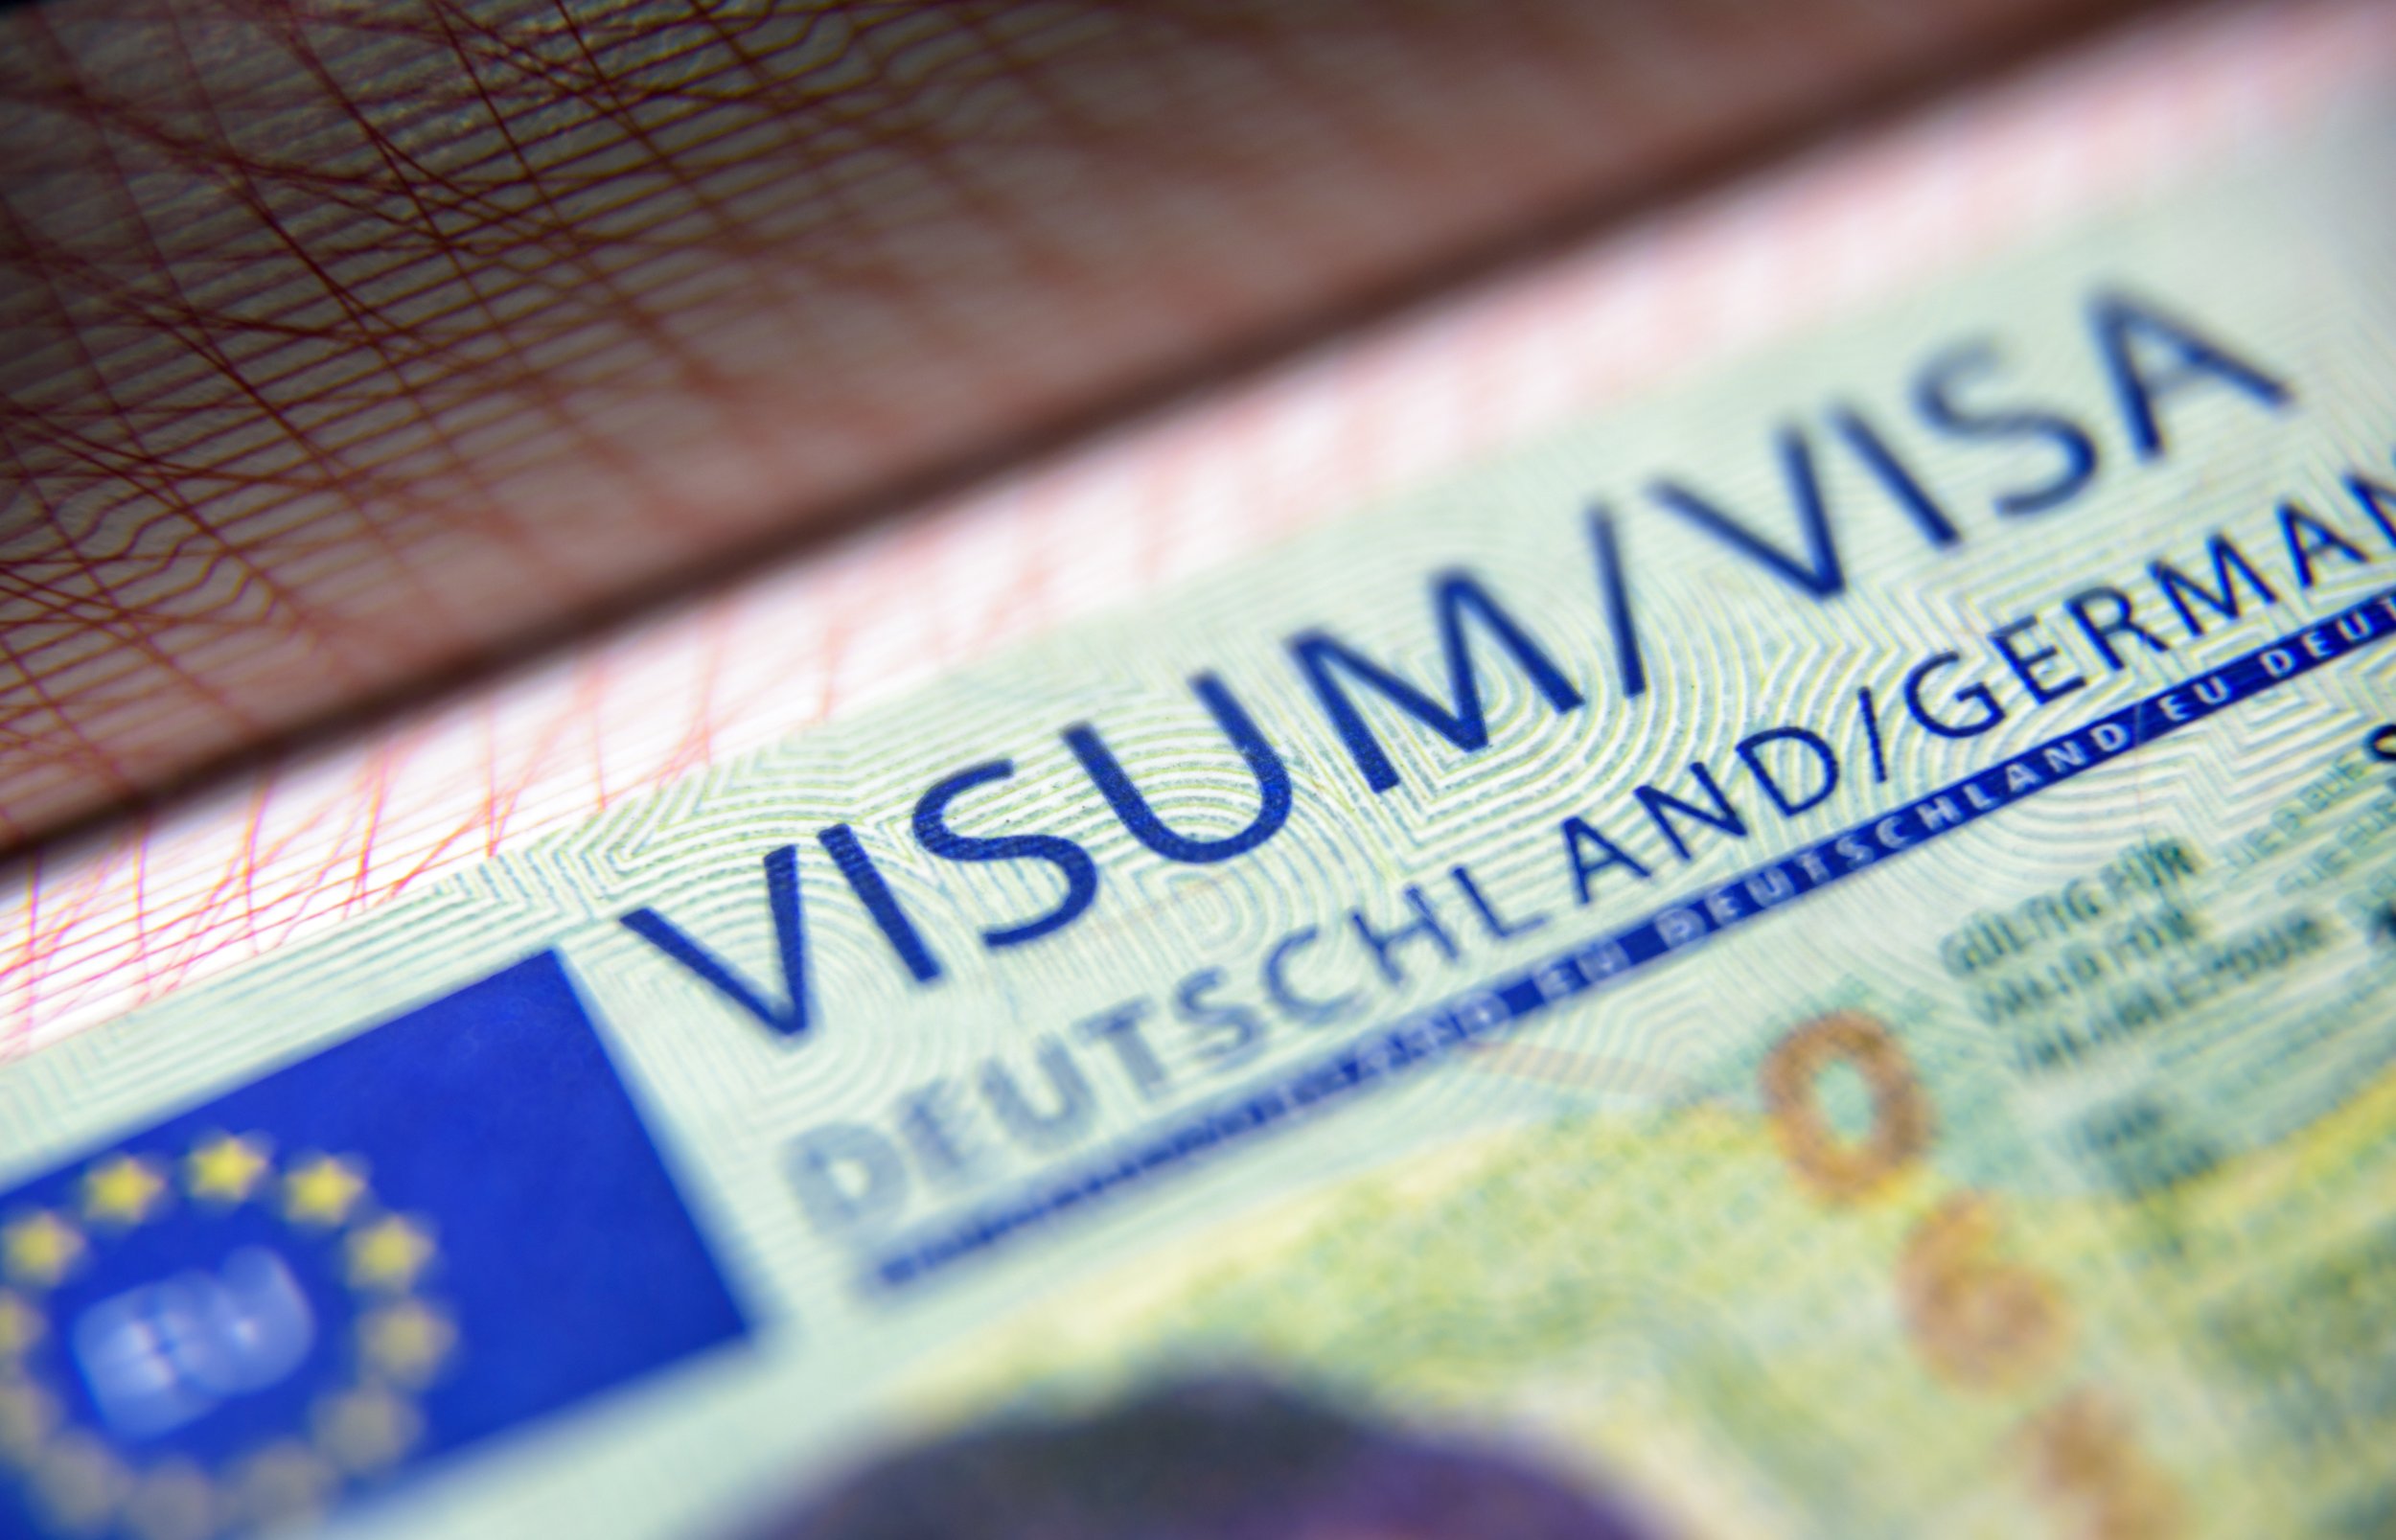 expedited passports and visas